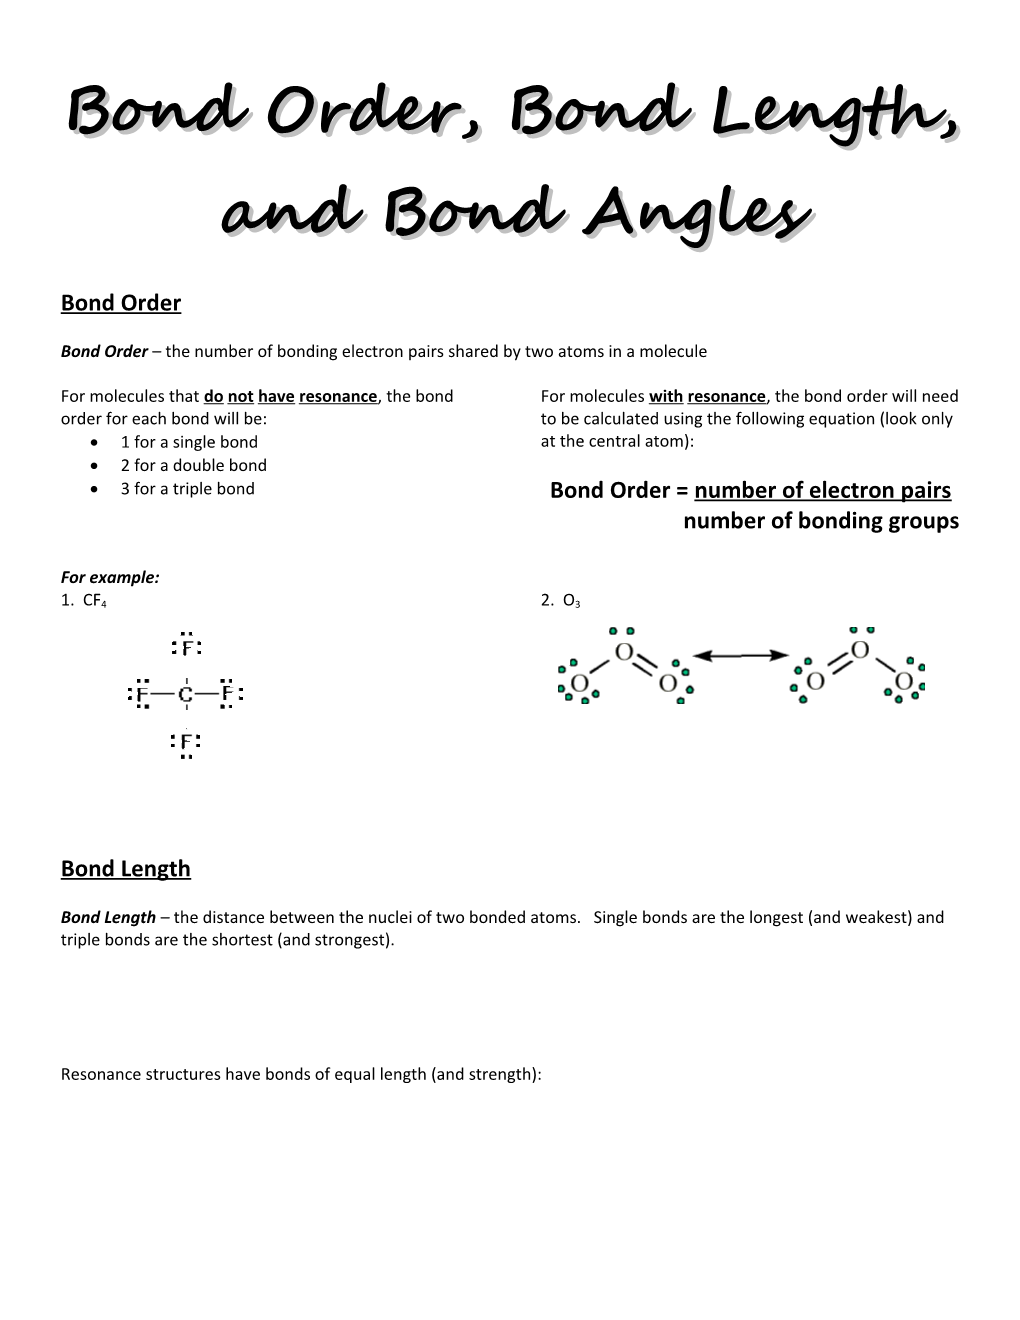 Bond Order, Bond Length, and Bond Angles